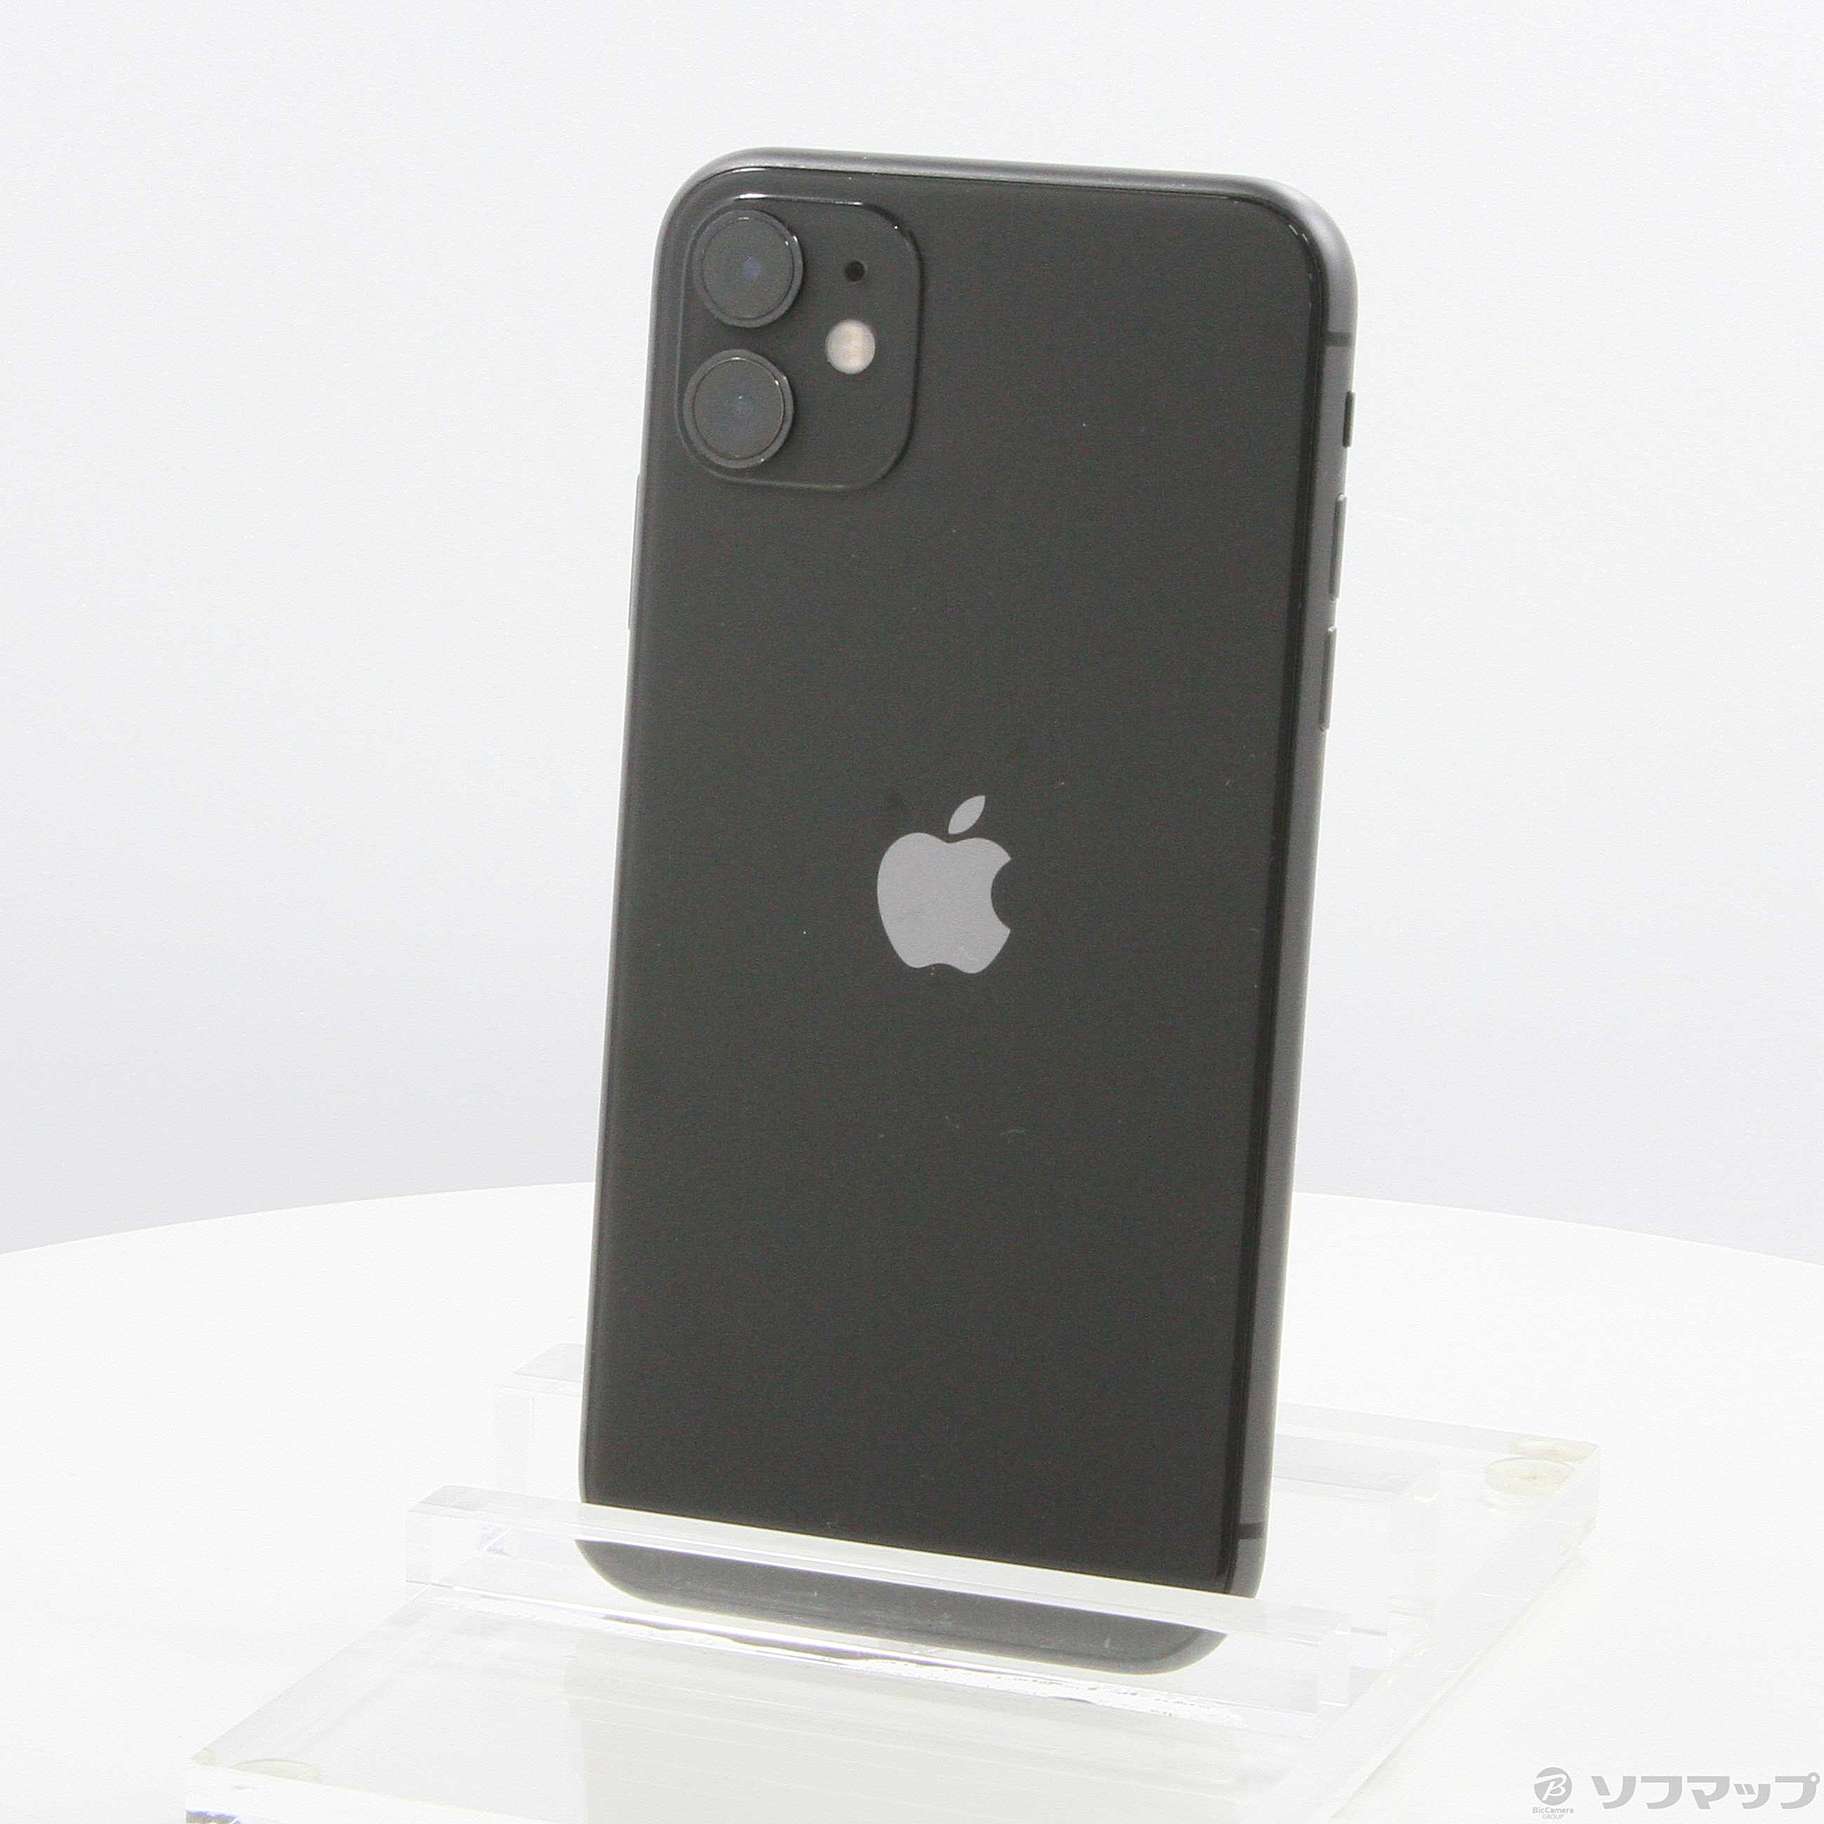 iPhone 11 128GB SIMフリー黒 - スマートフォン本体